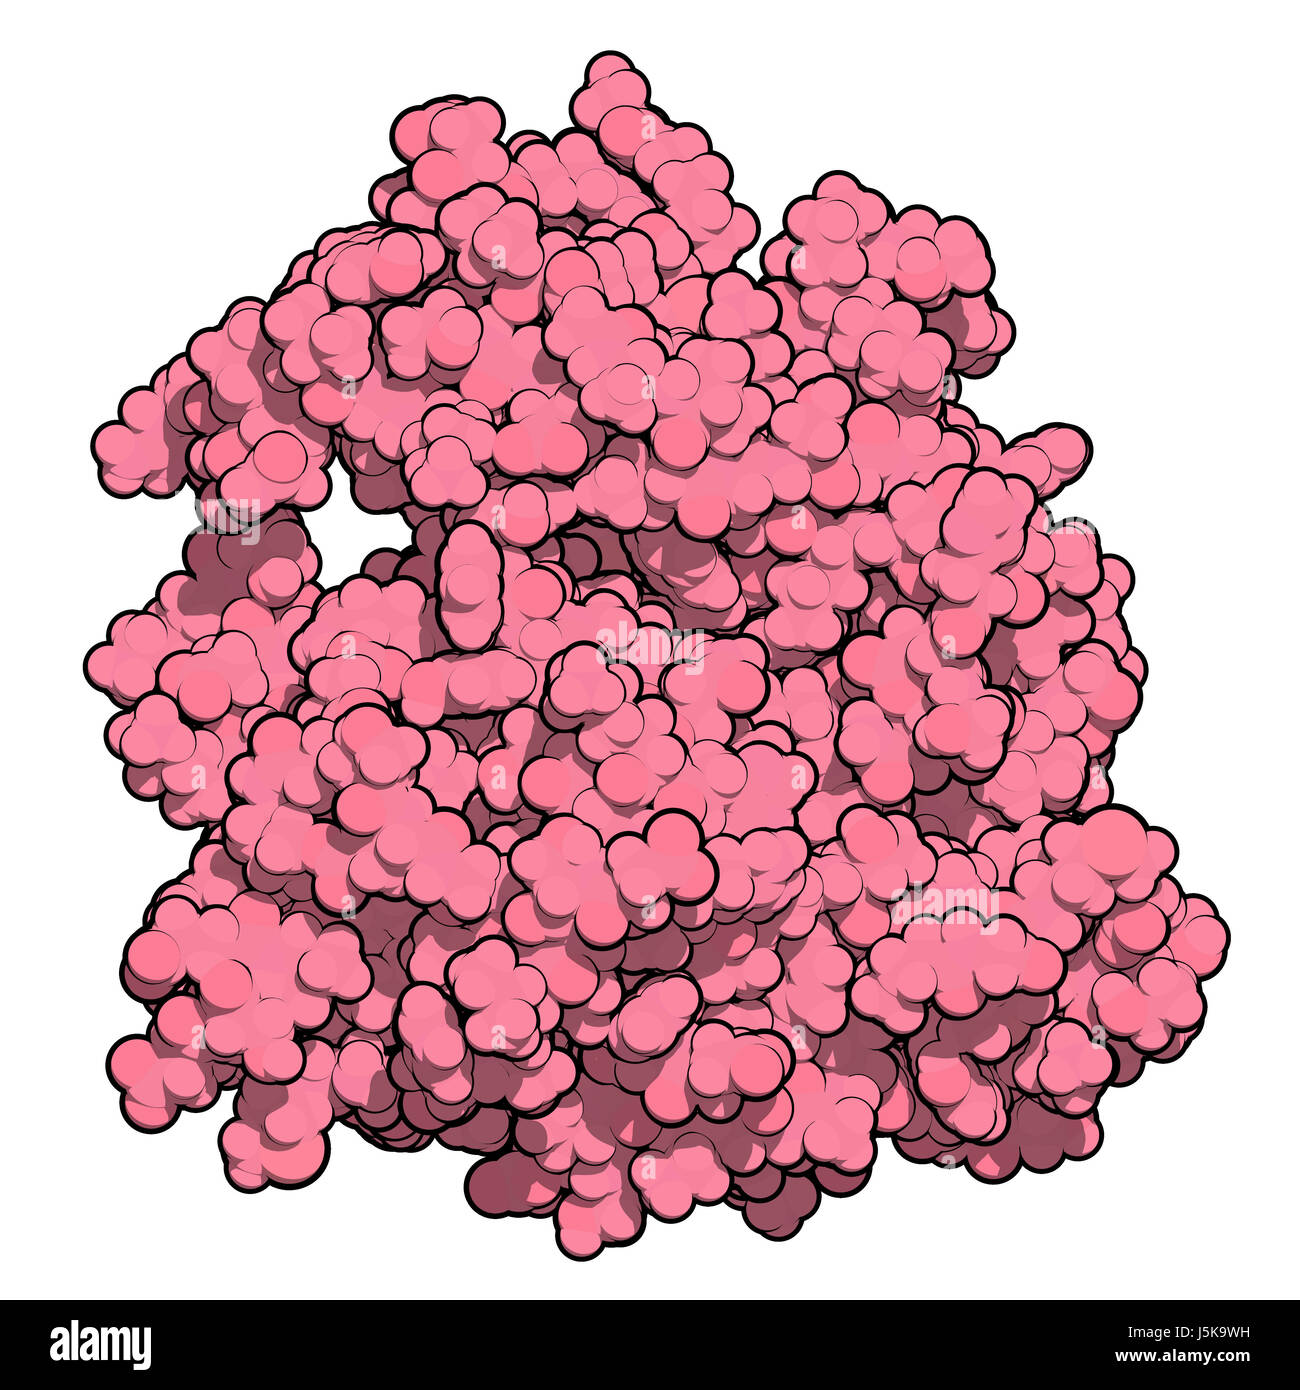 Platelet-derived growth factor receptor A (PDGFRA, kinase domain) protein. Target of anticancer monoclonal antibody olaratumab. 3D rendering. Stock Photo